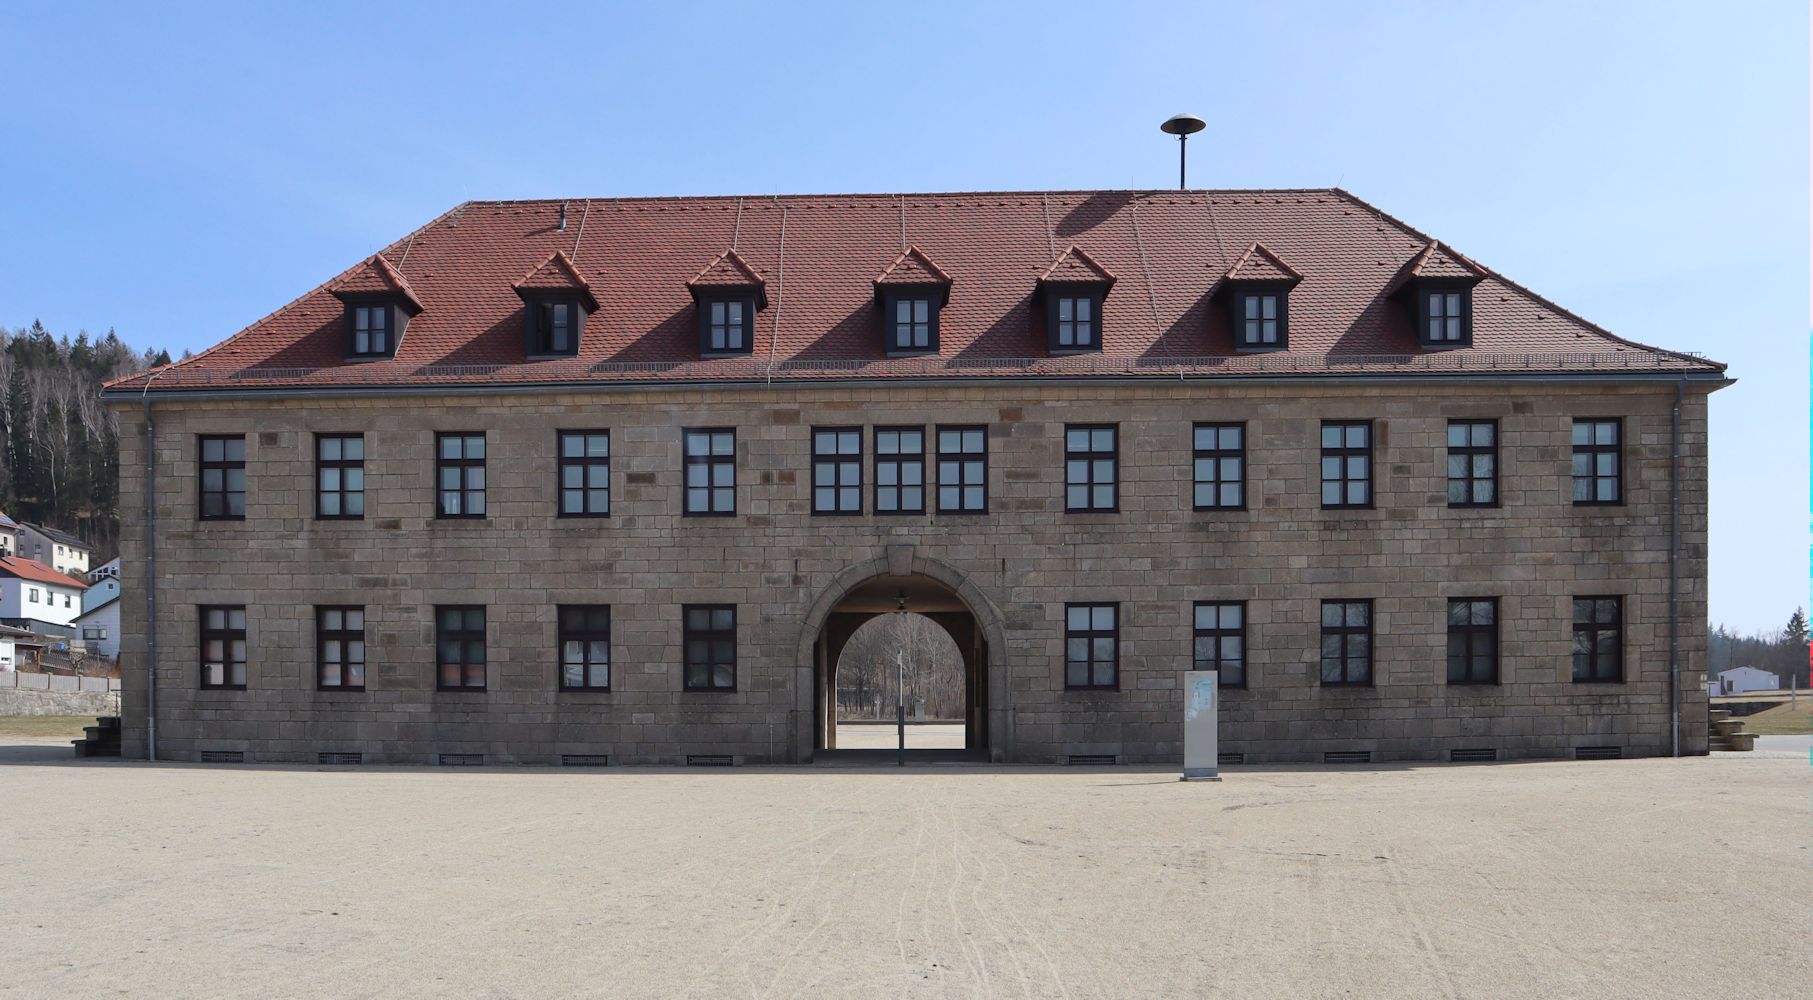 Kommandanturgebäude des ehemaligen Konzentrationslagers in Flossenbürg